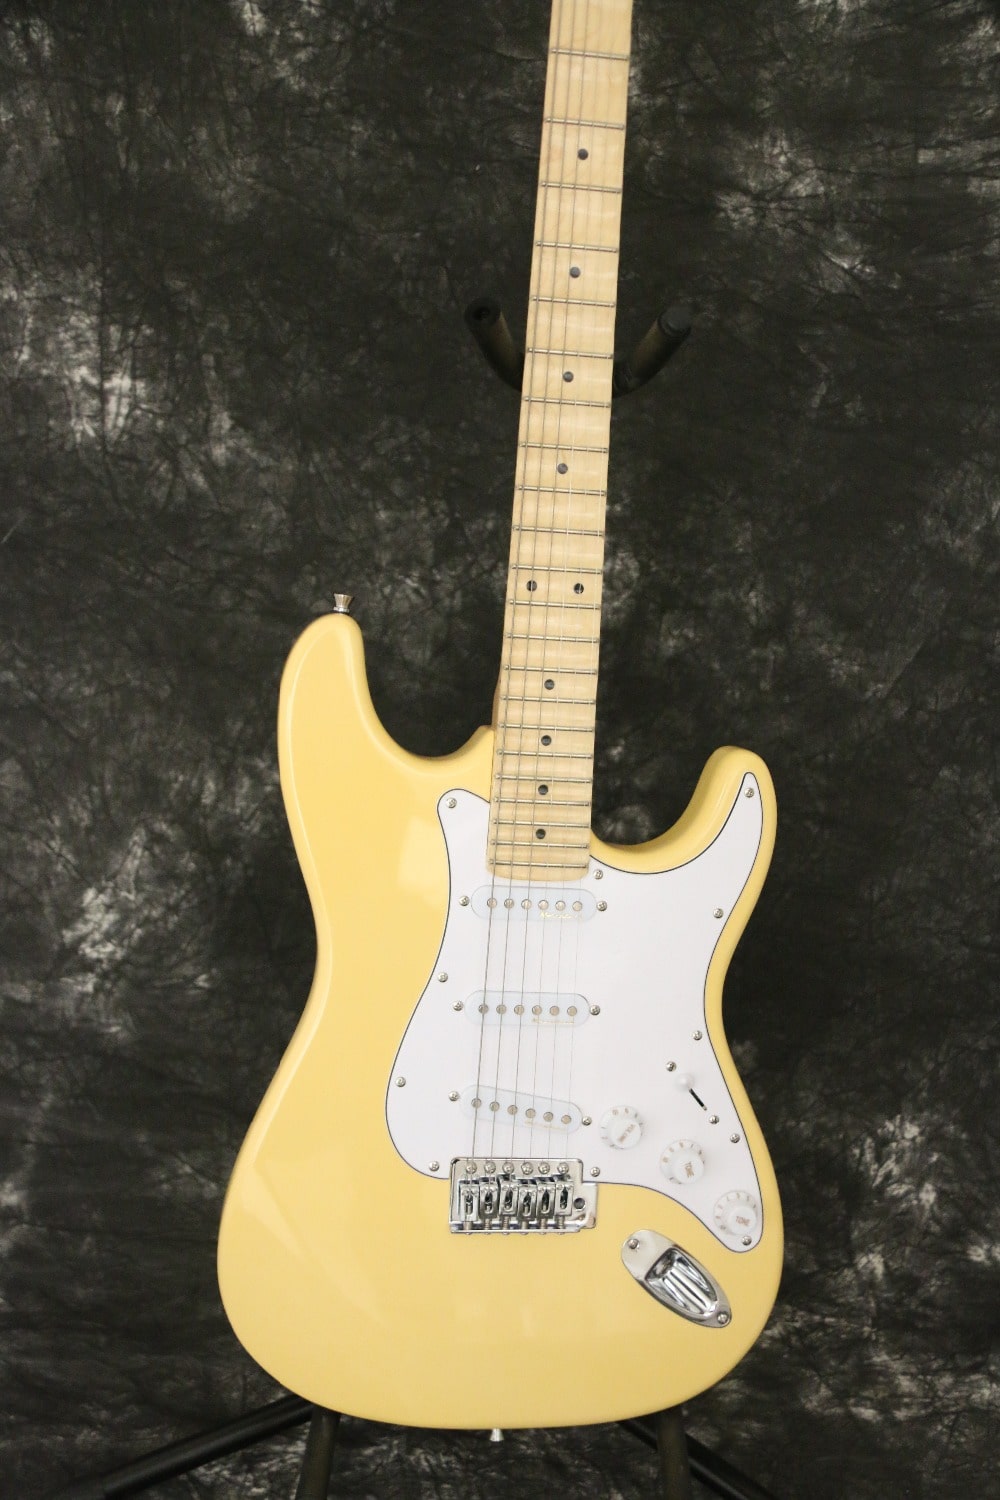 Электрогитара  — реплика Fender Stratocaster купить на Алиэкспресс